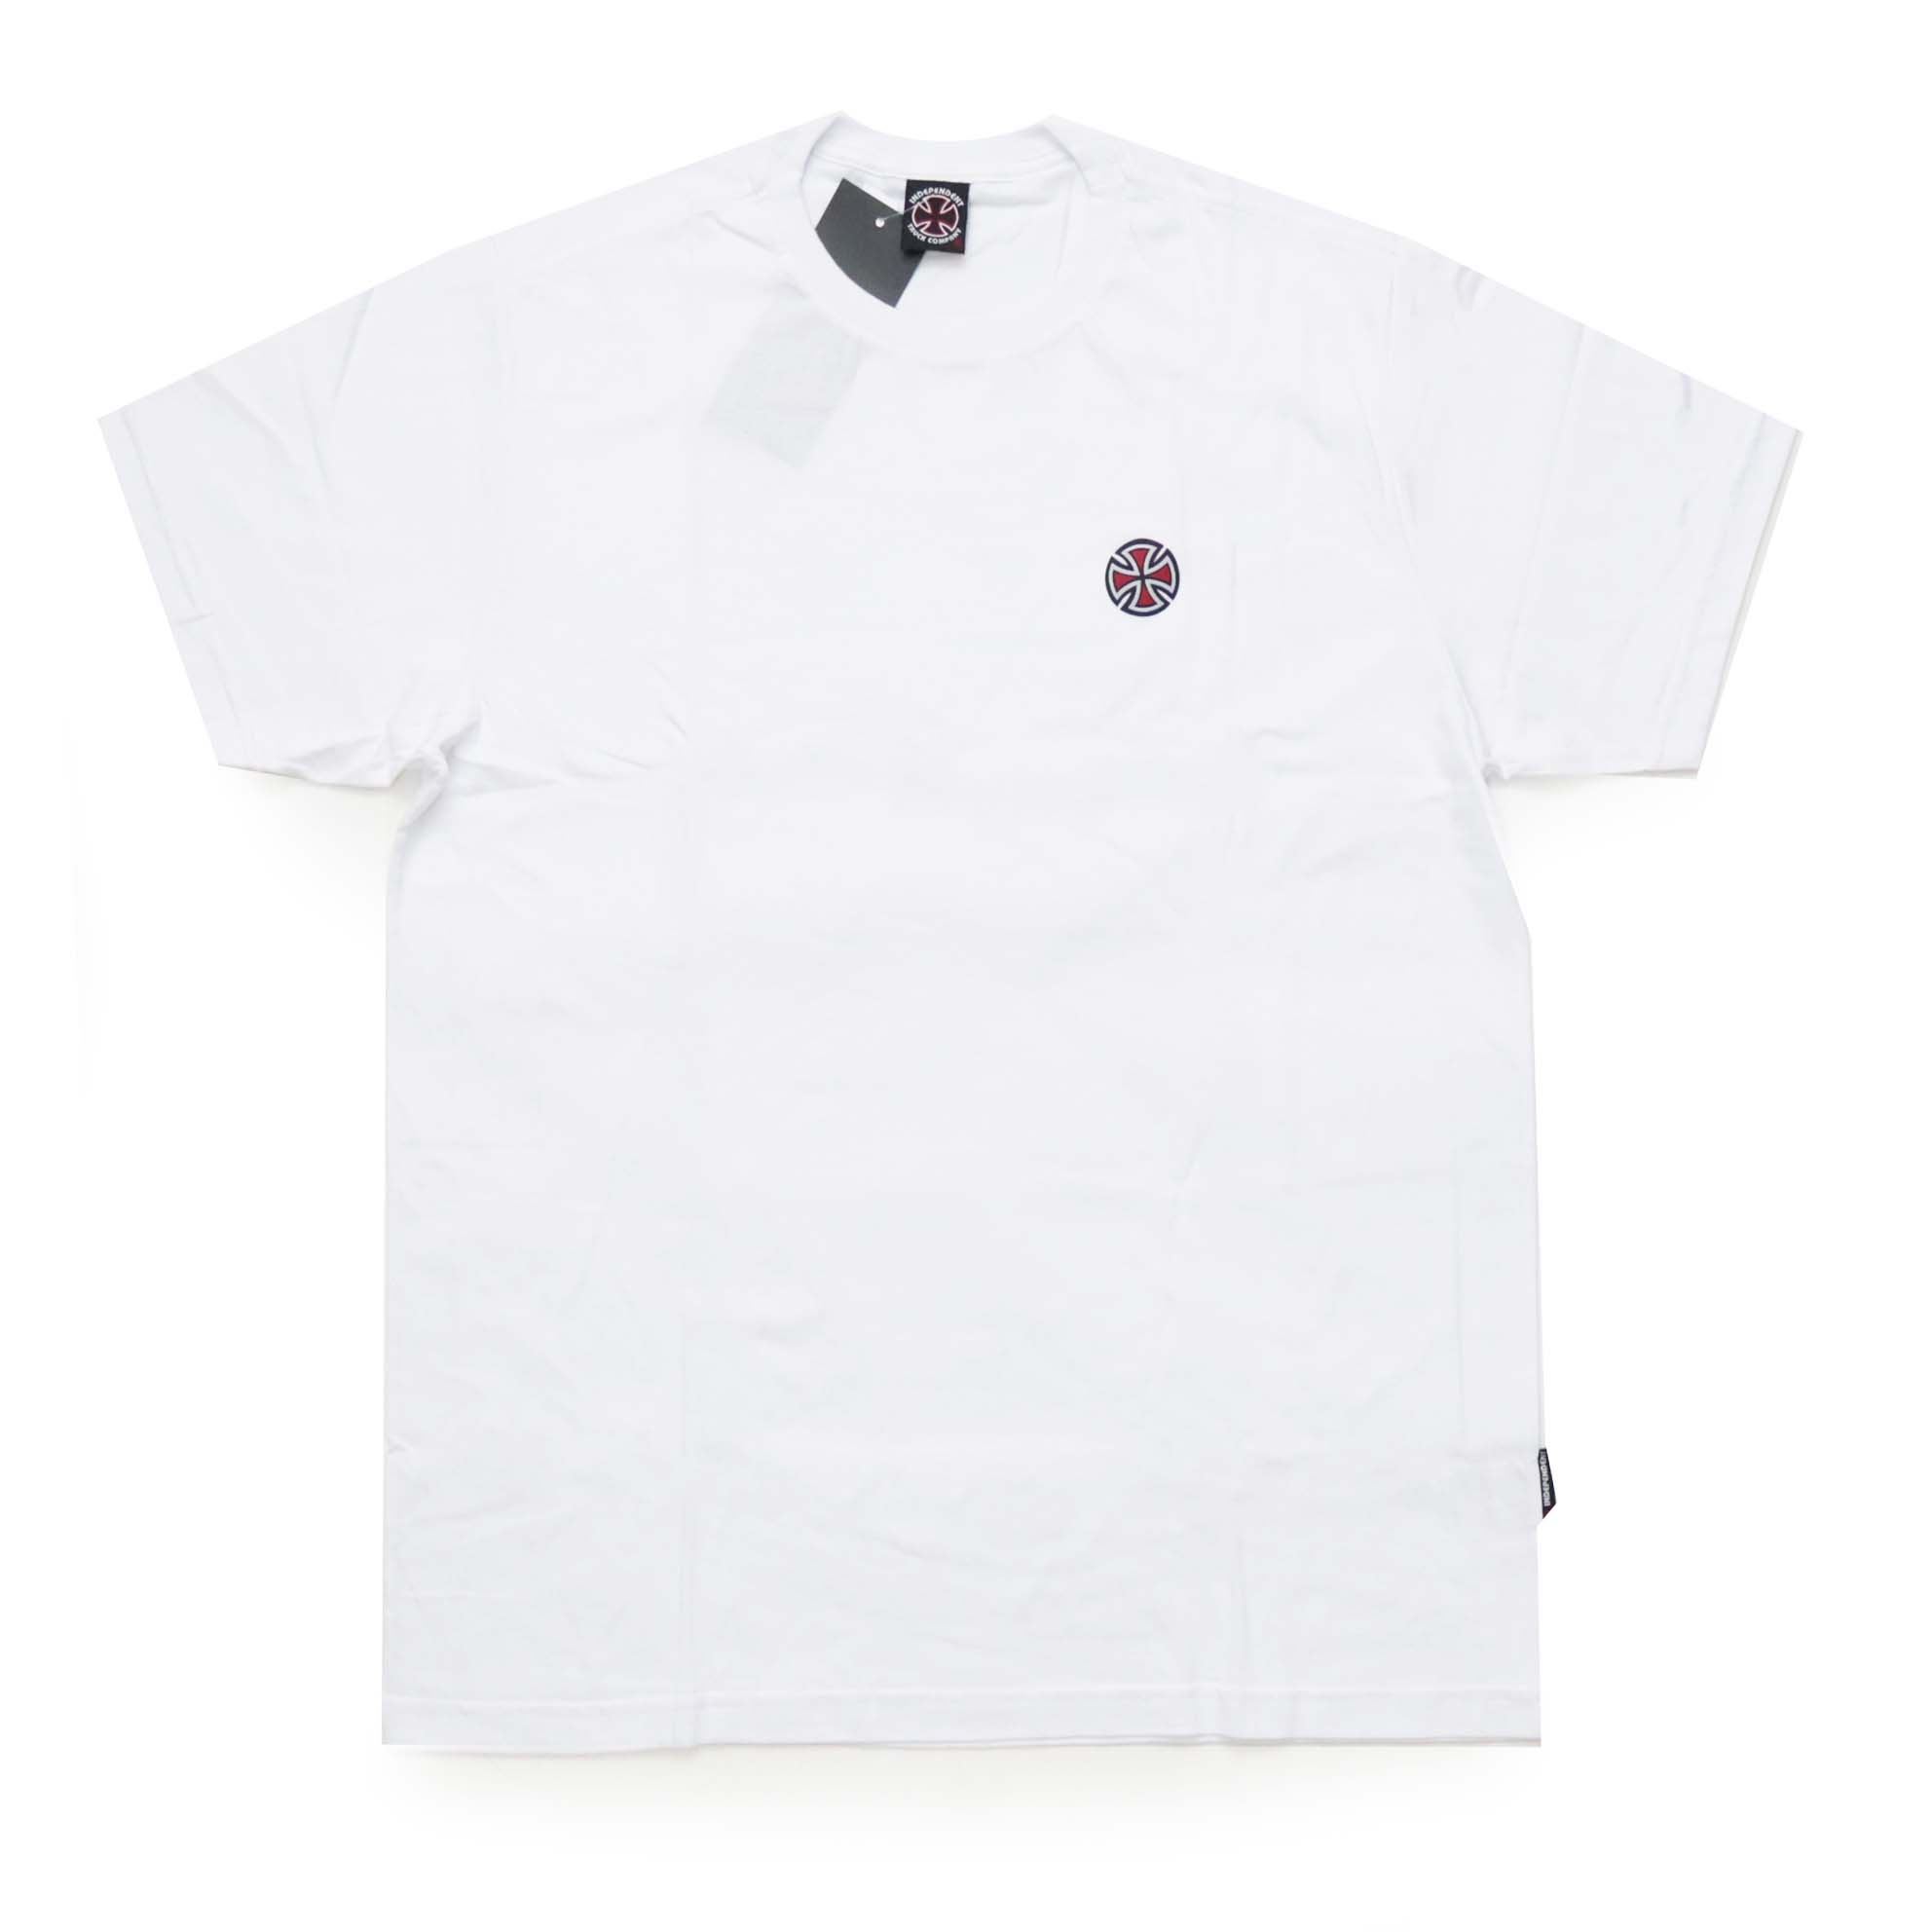 Camiseta Independent 4 Tier Cross 3 Colors Bottom - Branco